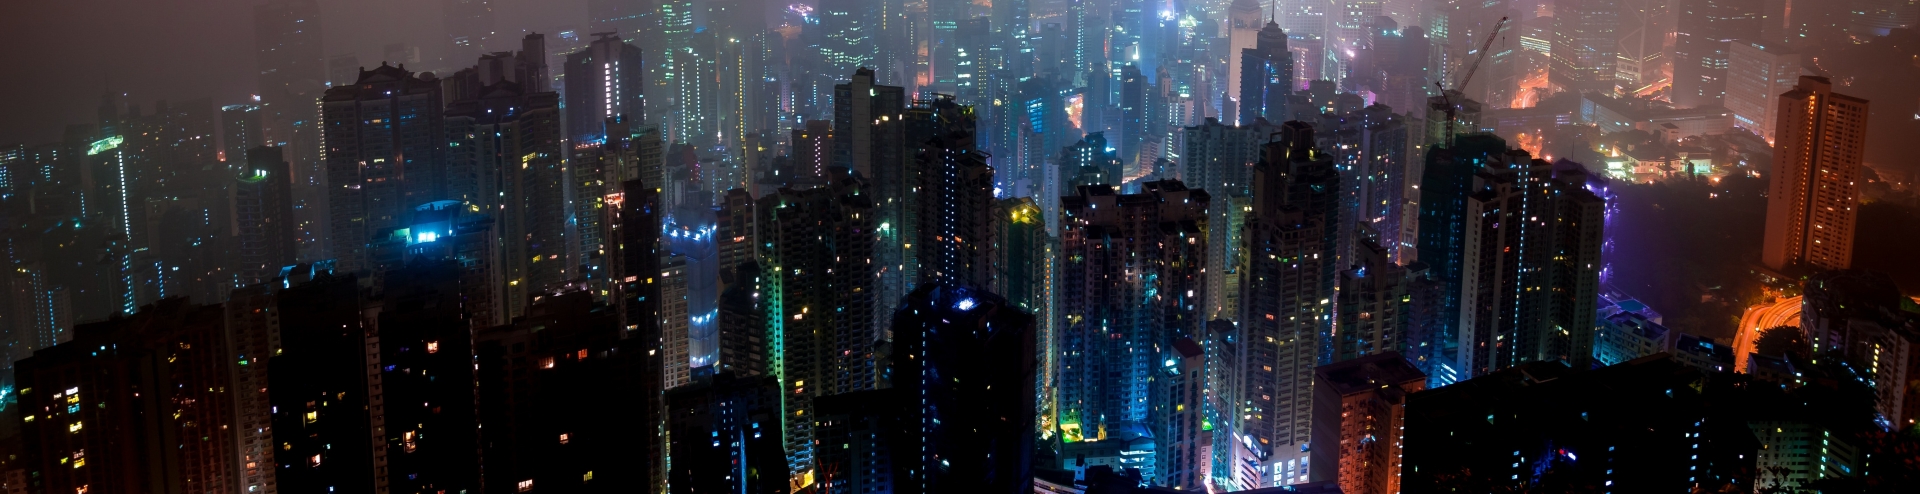 Nightscape city lights urban fog